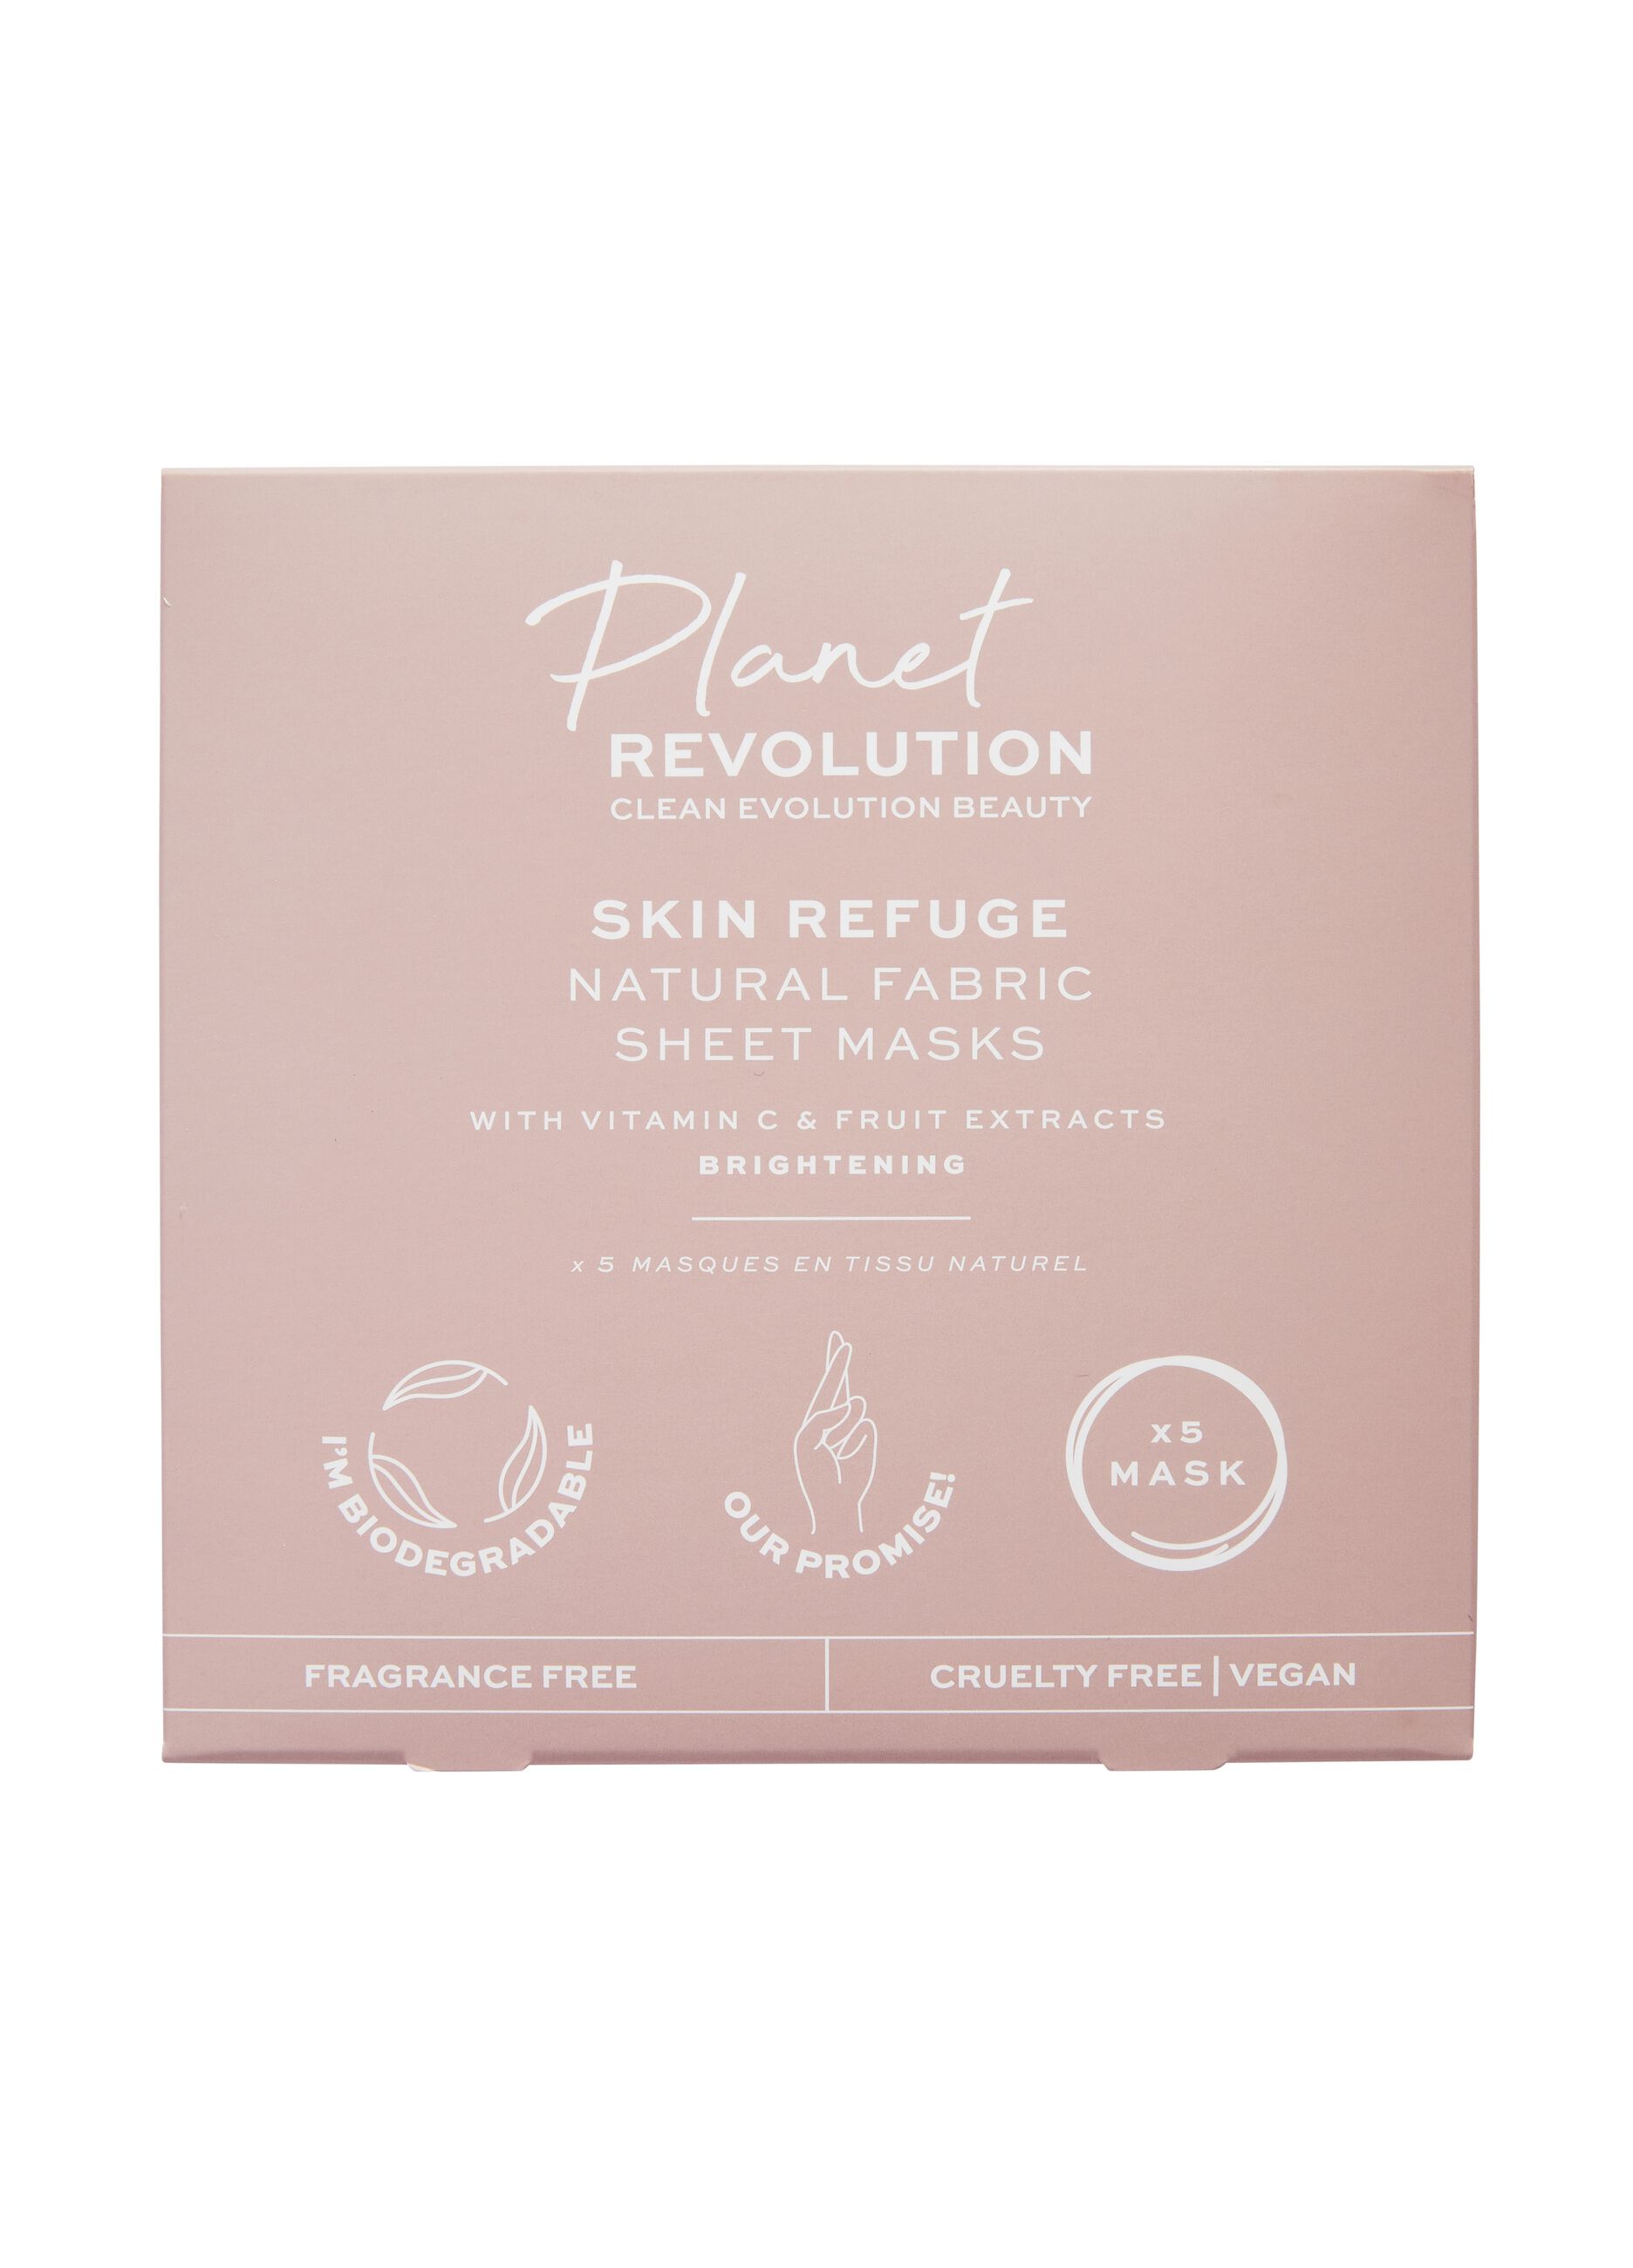 Planet Revolution brightening face mask kit